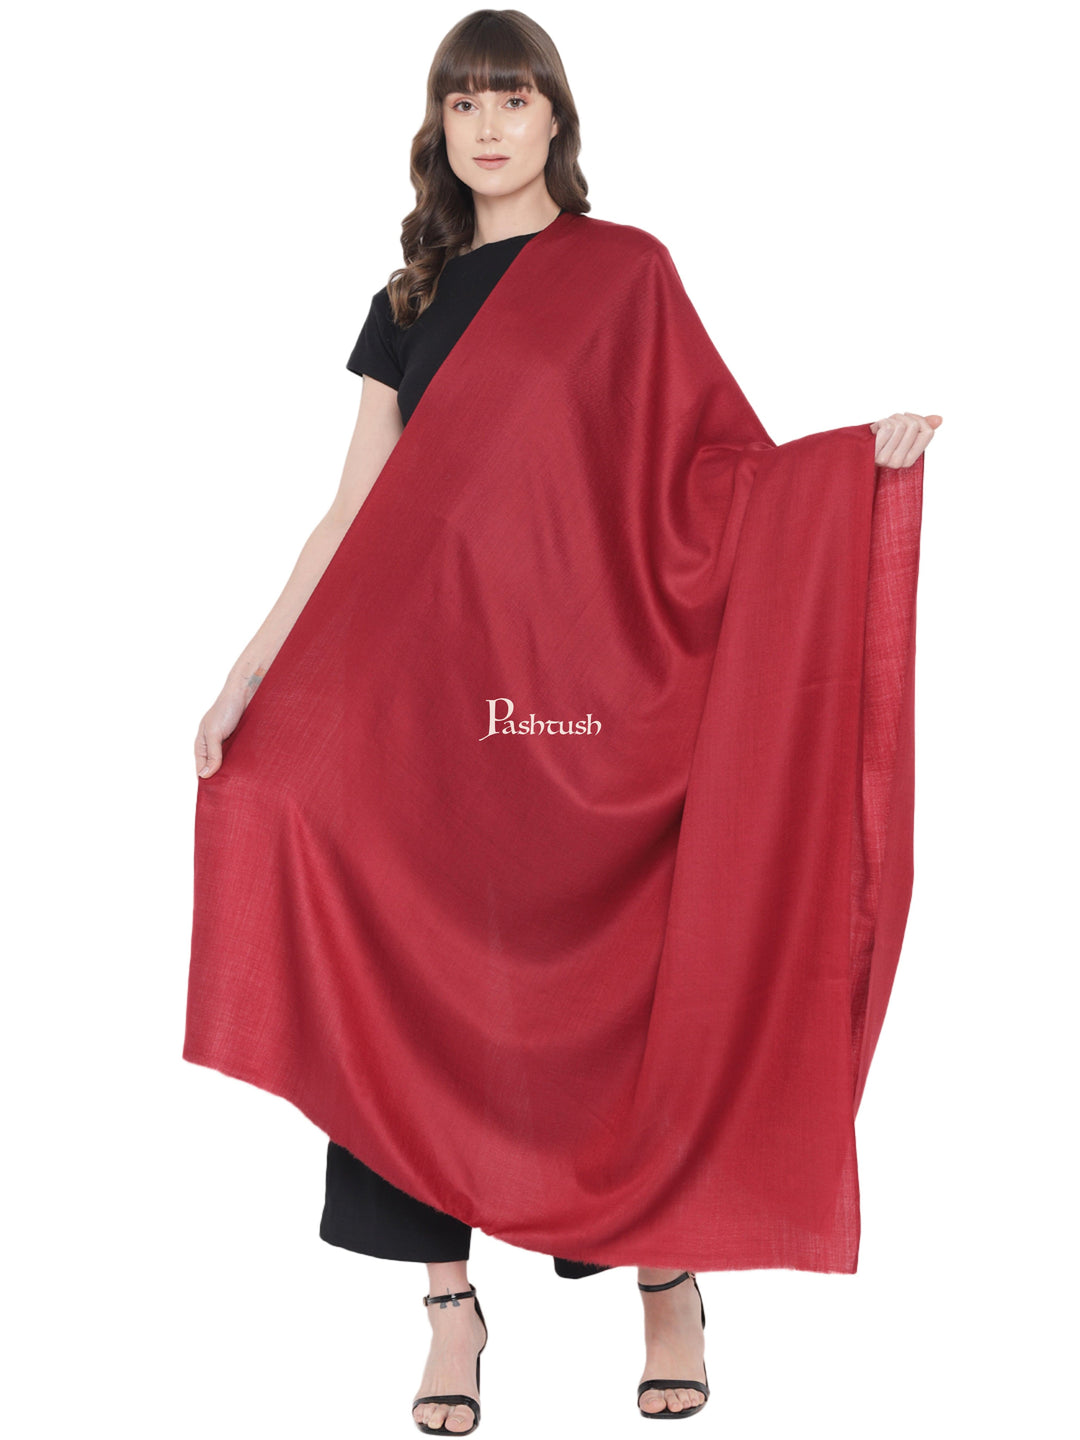 Pashtush India Womens Shawls Pashtush Womens Fine Wool Shawl, Extra Soft Warm - Light Weight, Solid Crimson